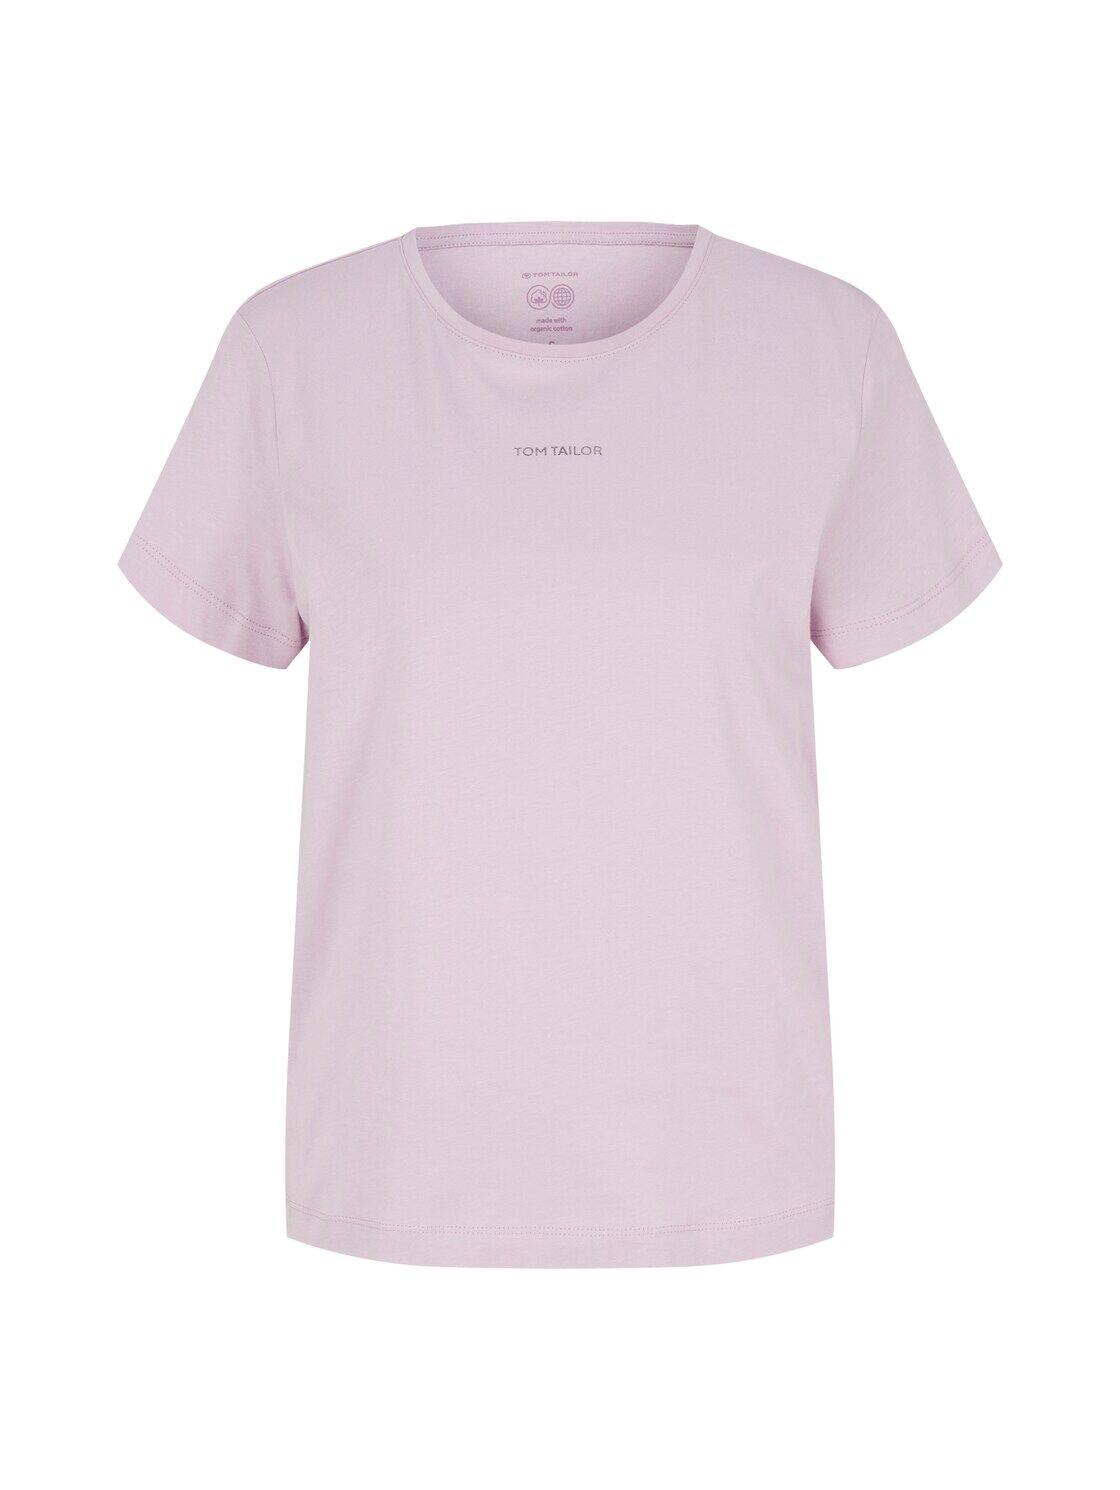 TOM TAILOR Damen Basic T-Shirt, lila, Logo Print, Gr. XS, baumwolle